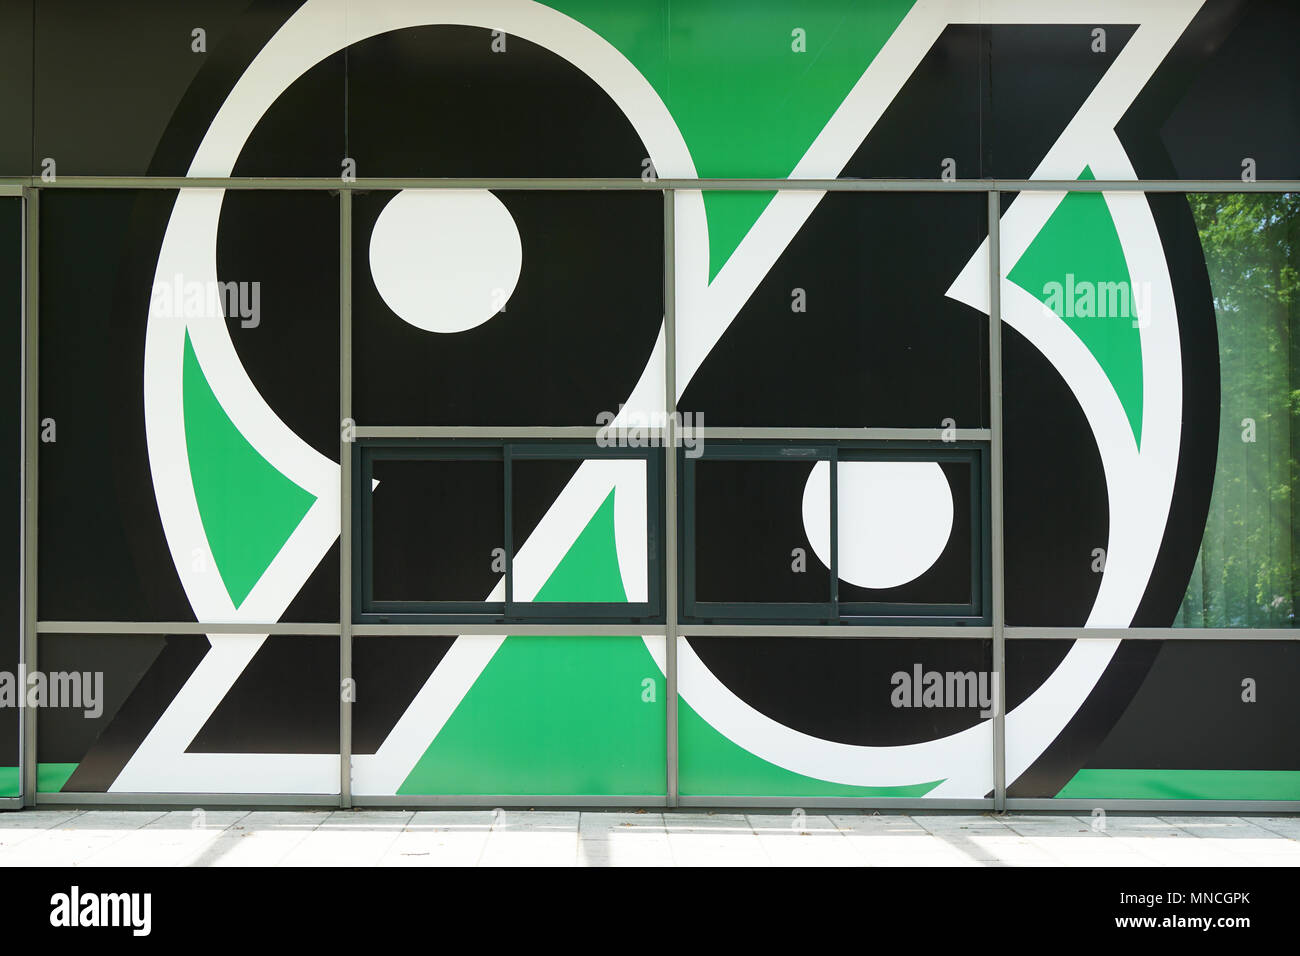 Hanovre, Allemagne - 13 mai 2018 : Logo de la Bundesliga allemande ou soccer club Hannover 96 sur boutique des fenêtre dans le stade. Banque D'Images